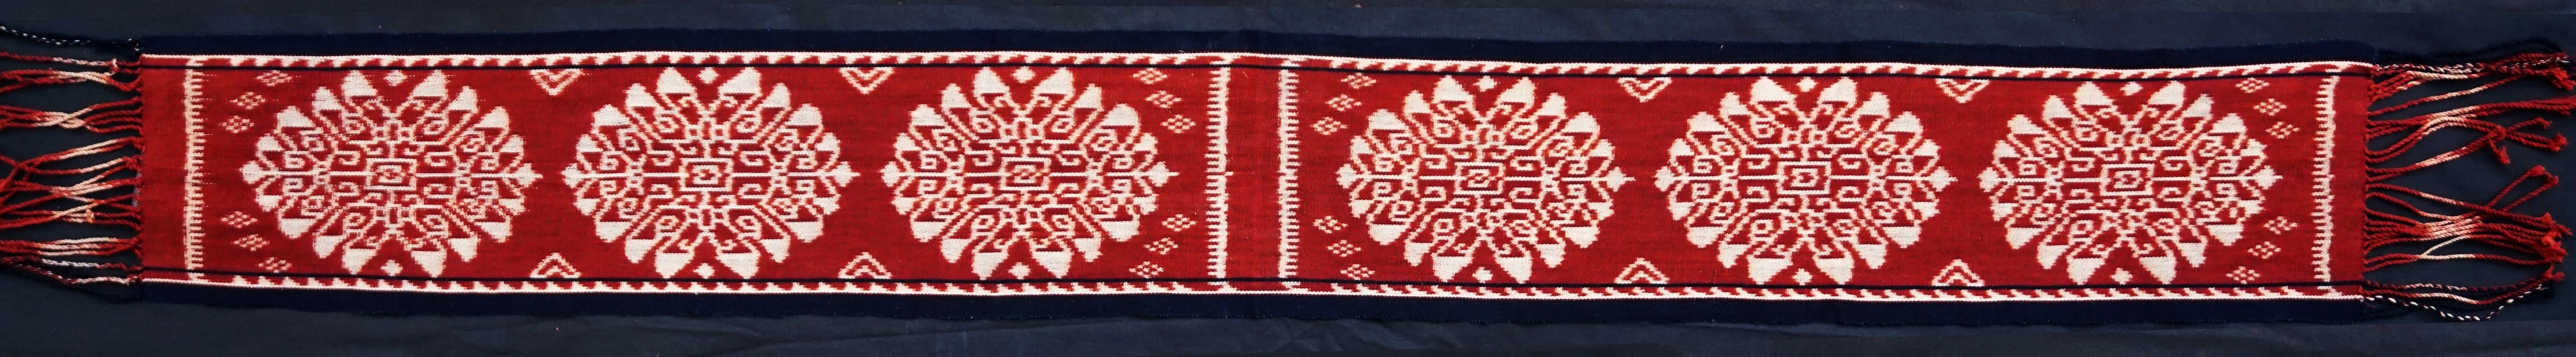 Tewuni Rai Savu - Shoulder cloth Selendang